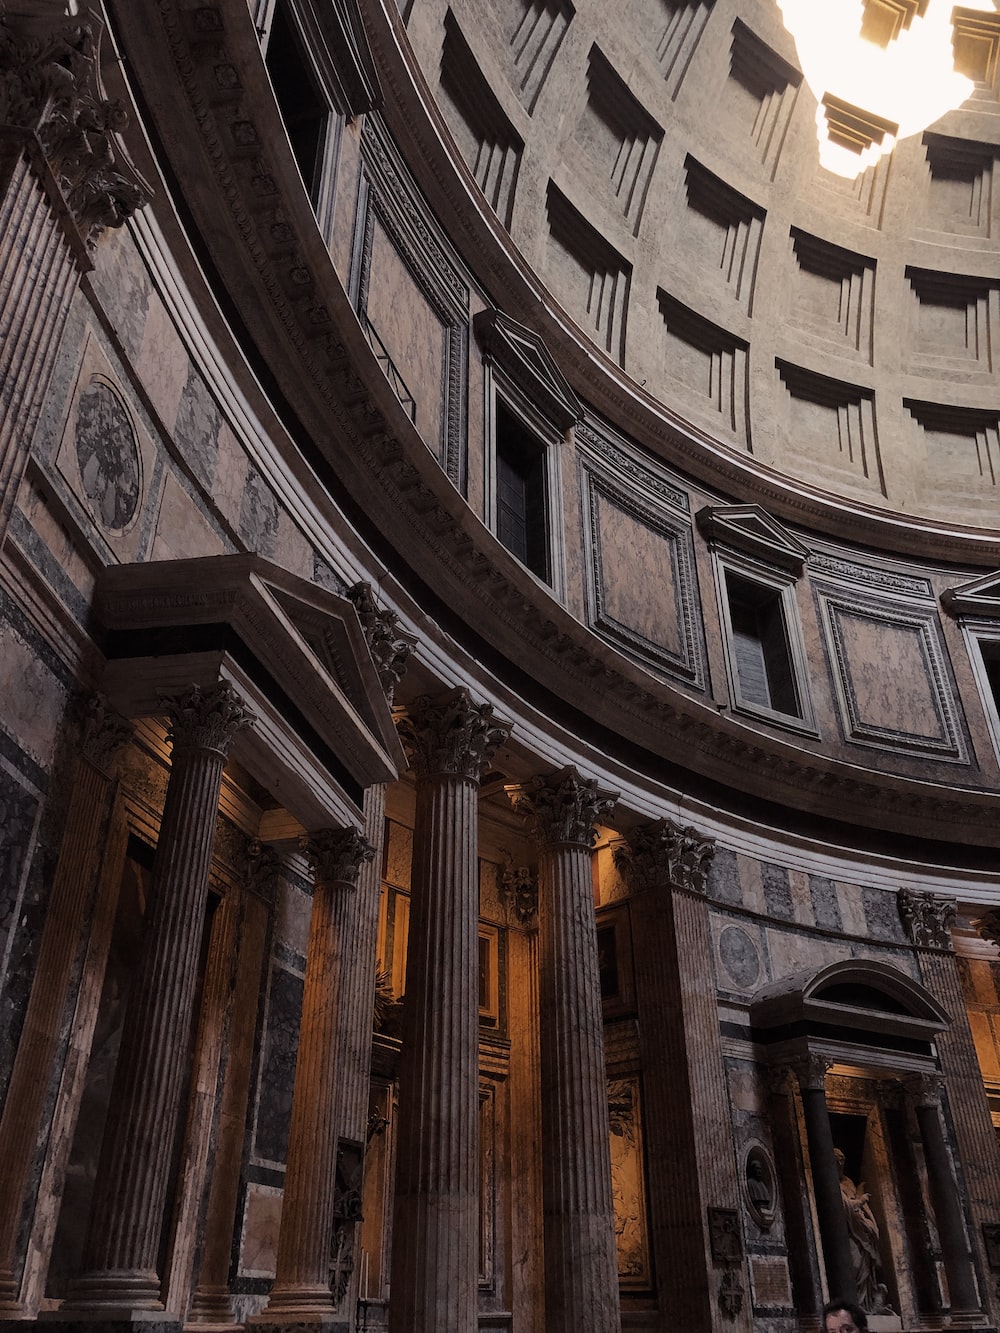 Rome Architecture Picture. Download Free Image